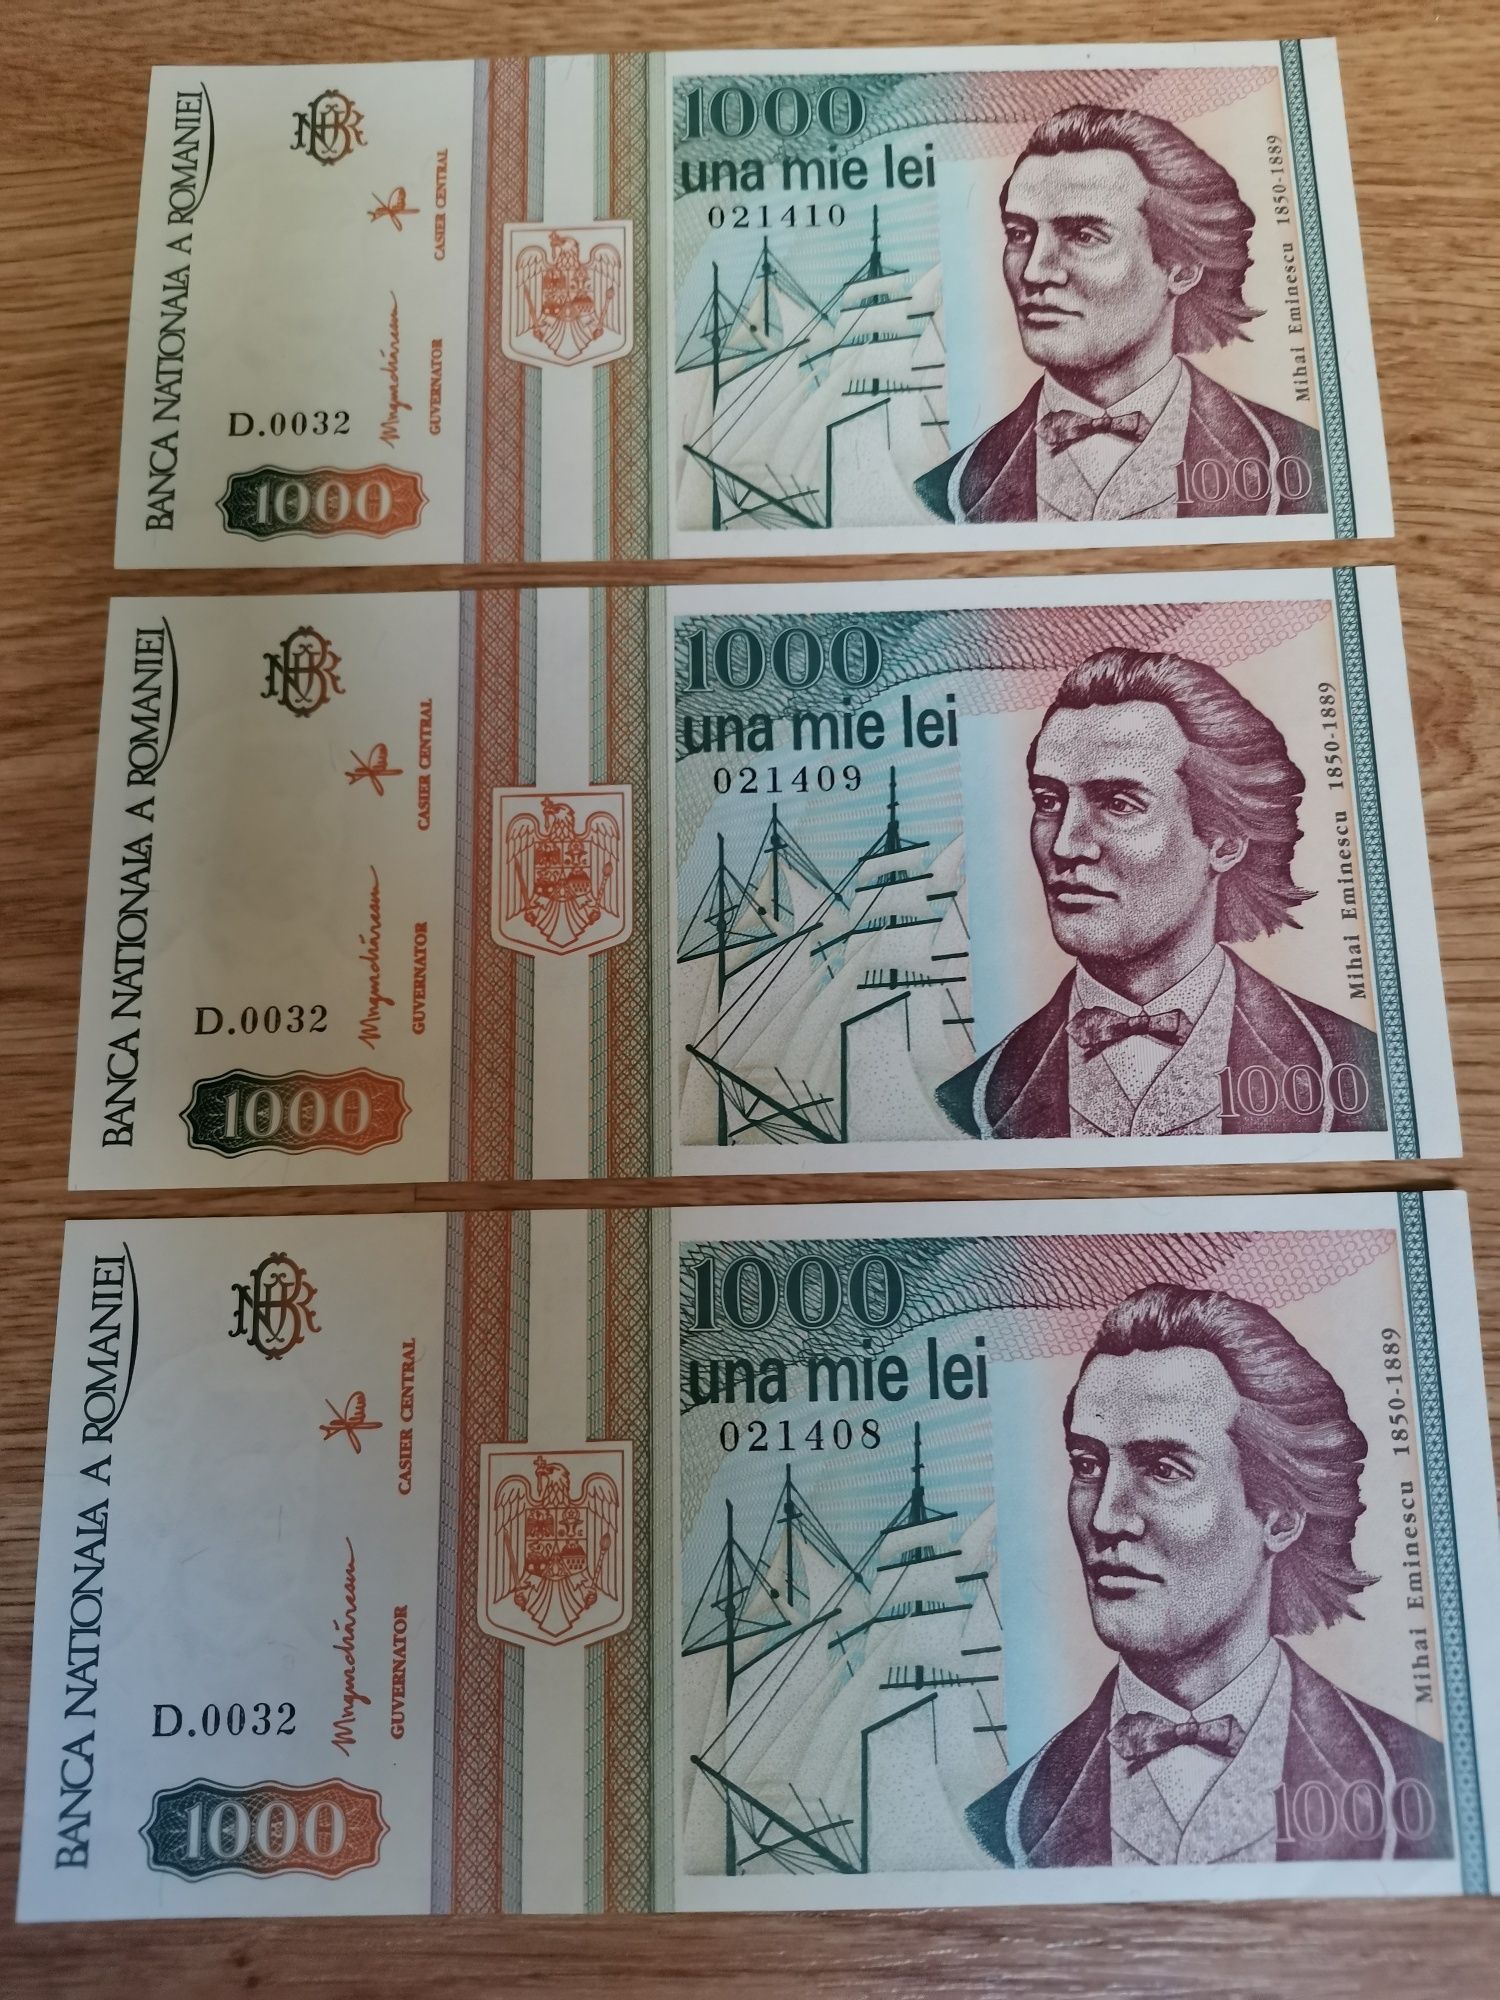 Bancnote vechi, serii consecutive.